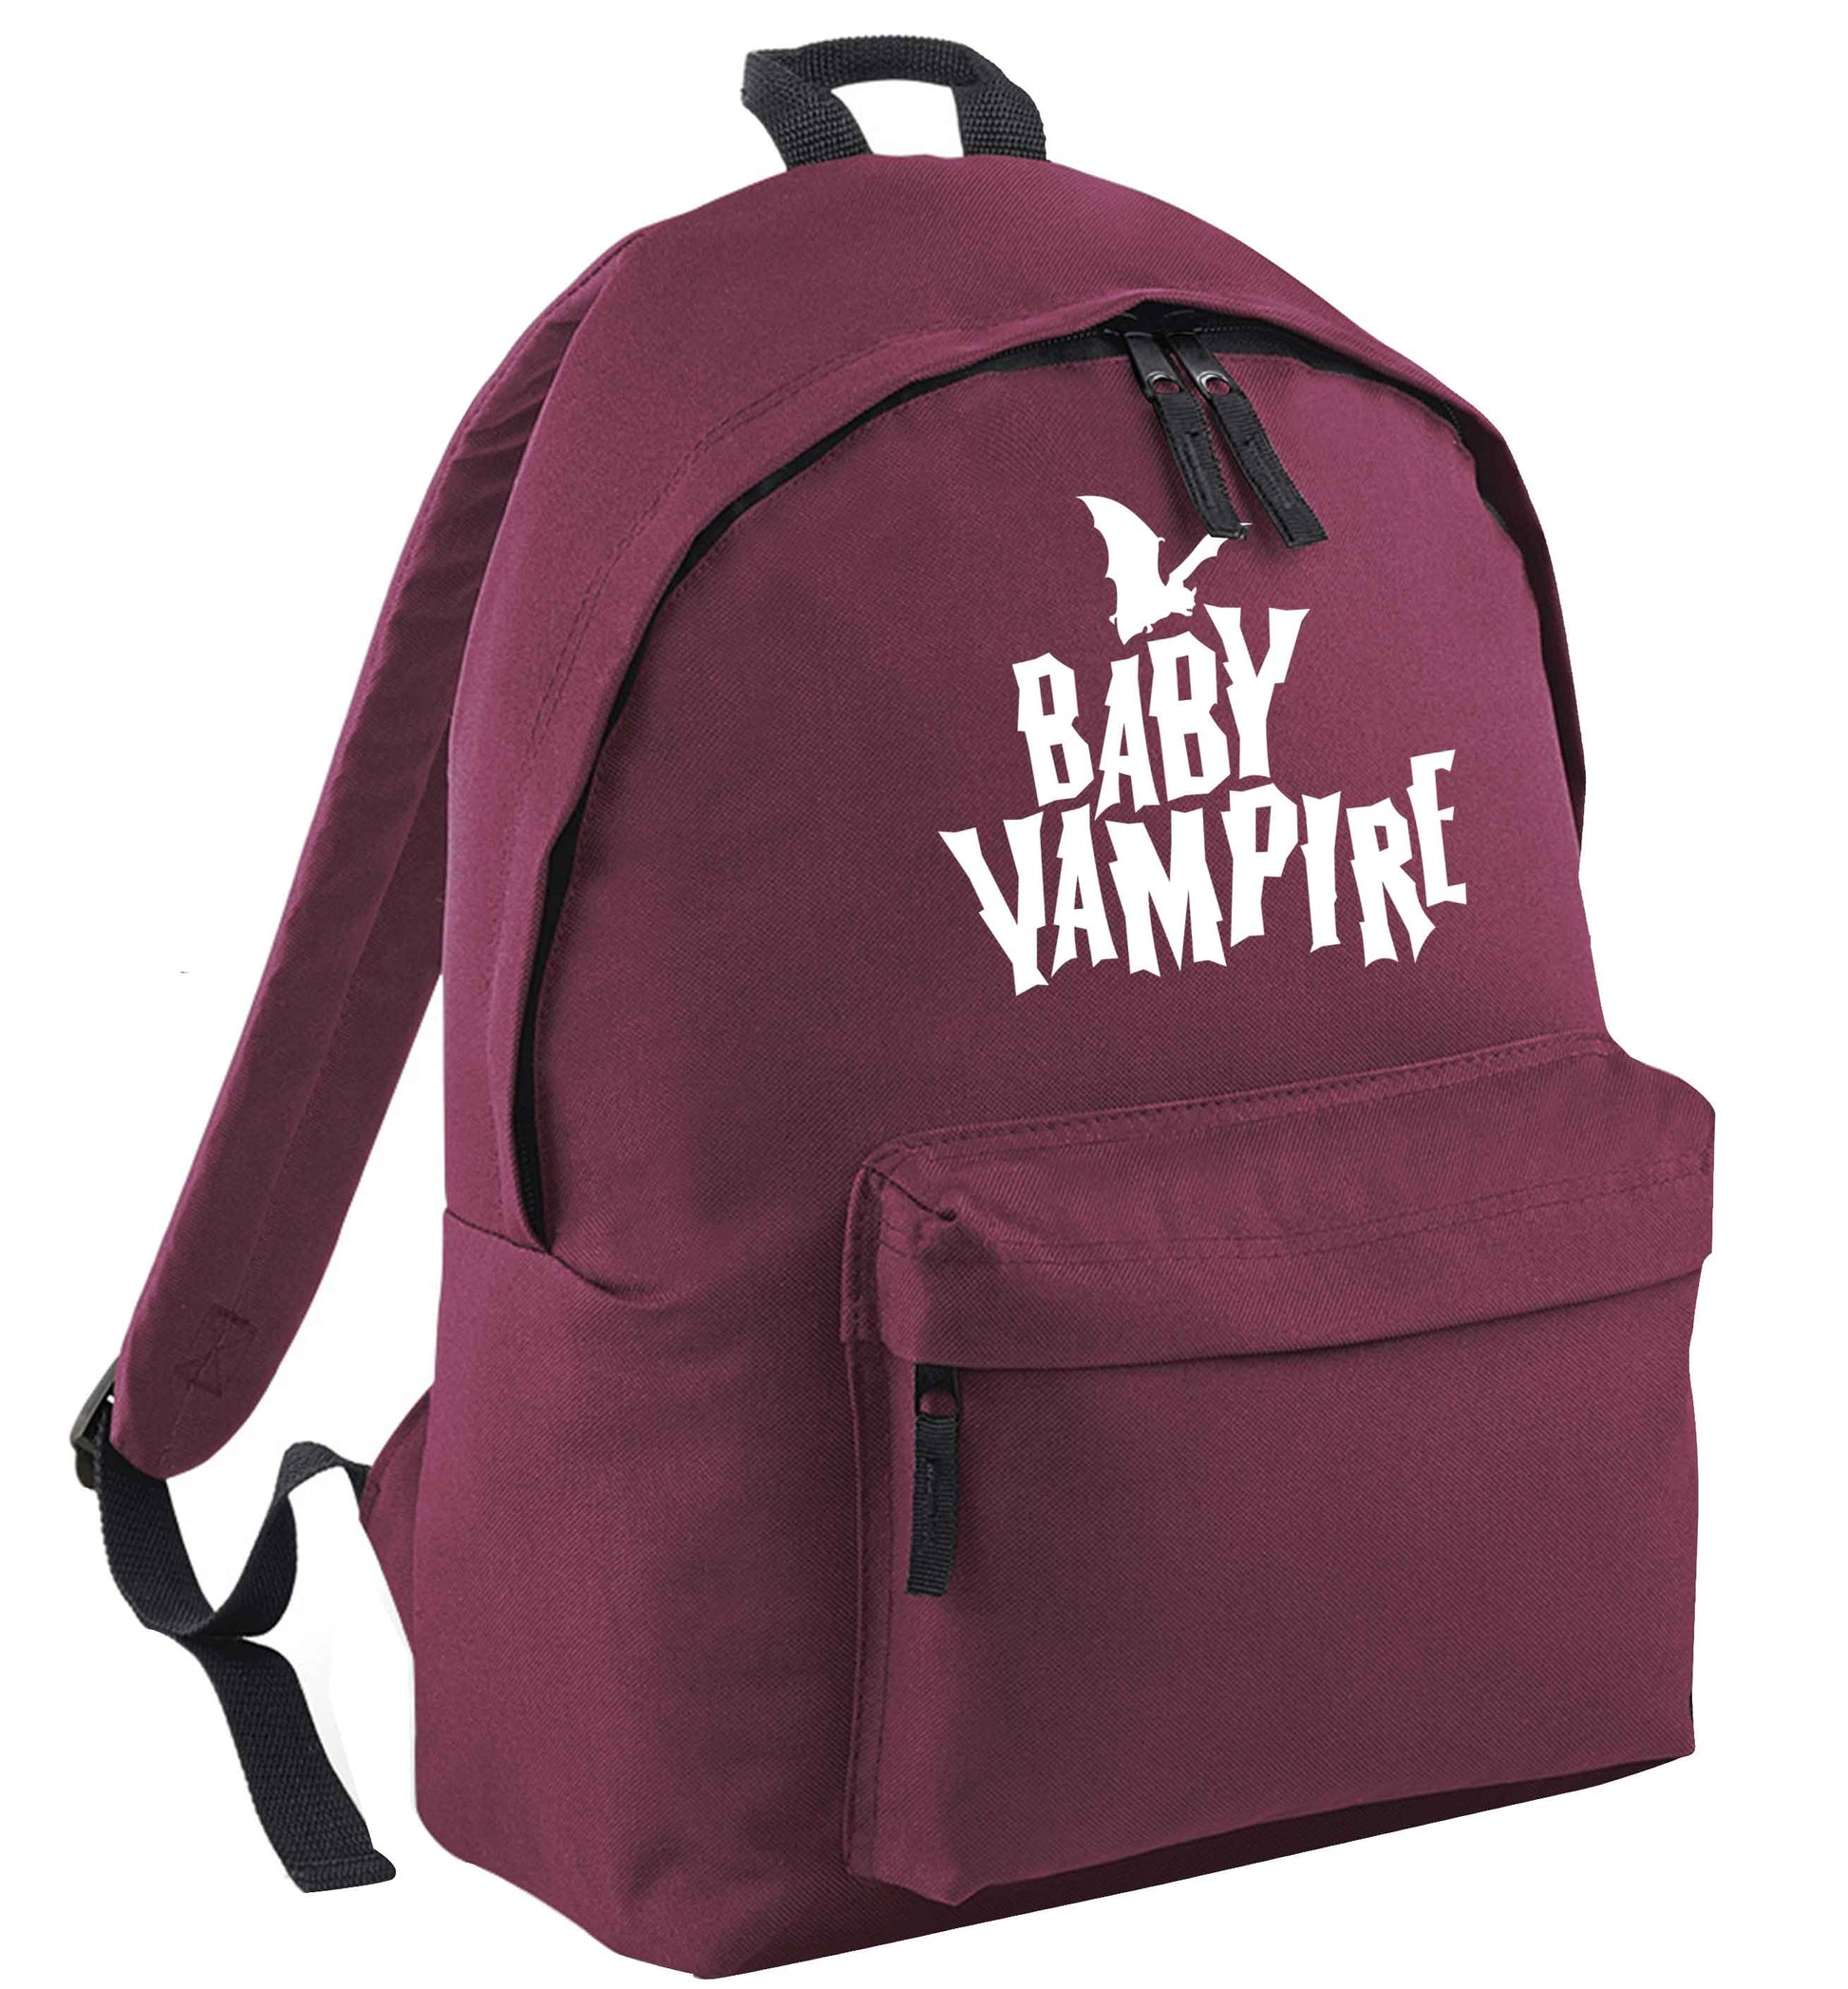 Baby vampire maroon adults backpack